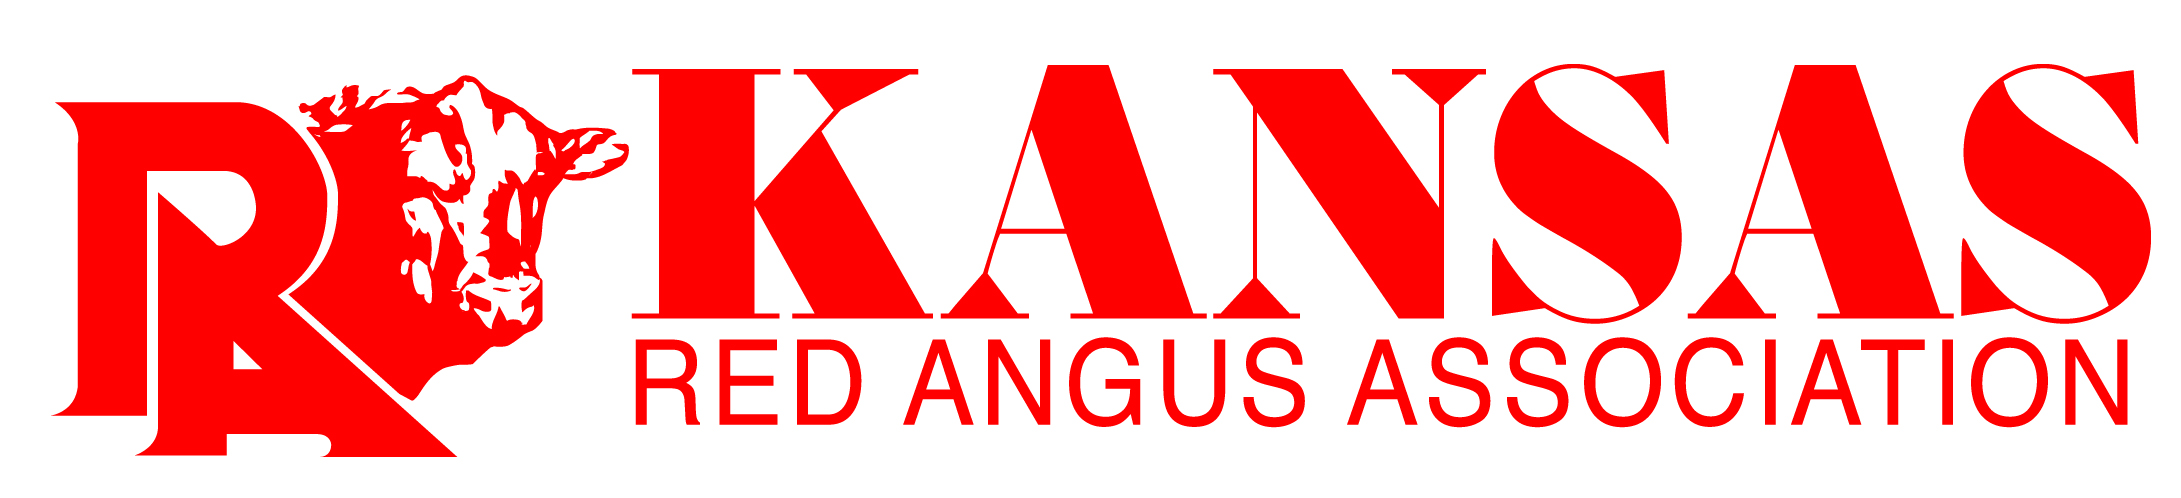 Kansas Red Angus